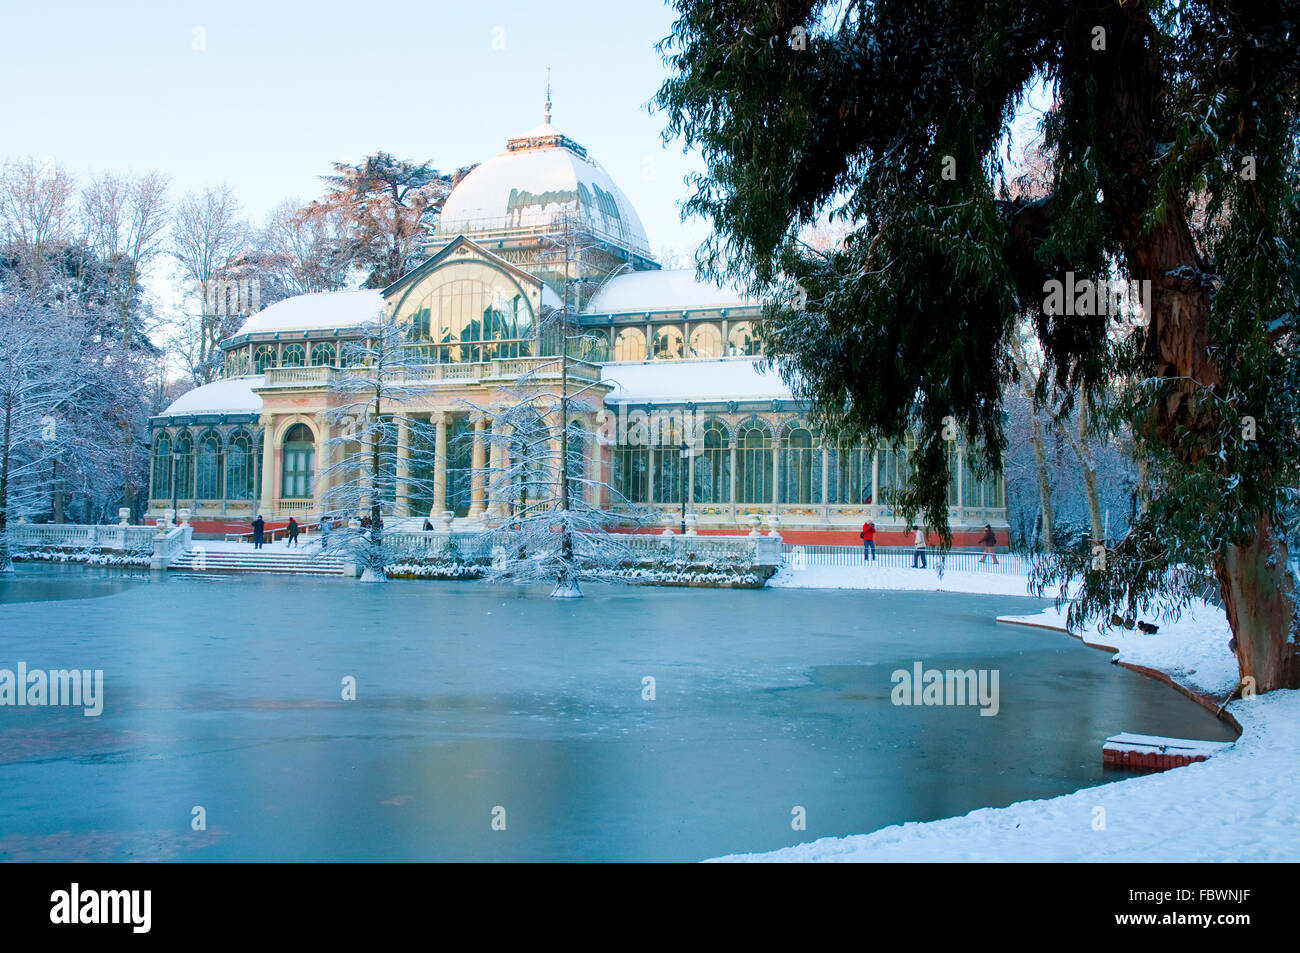 Snow covered Cristal Palace. The Retiro park, Madrid, Spain. Stock Photo